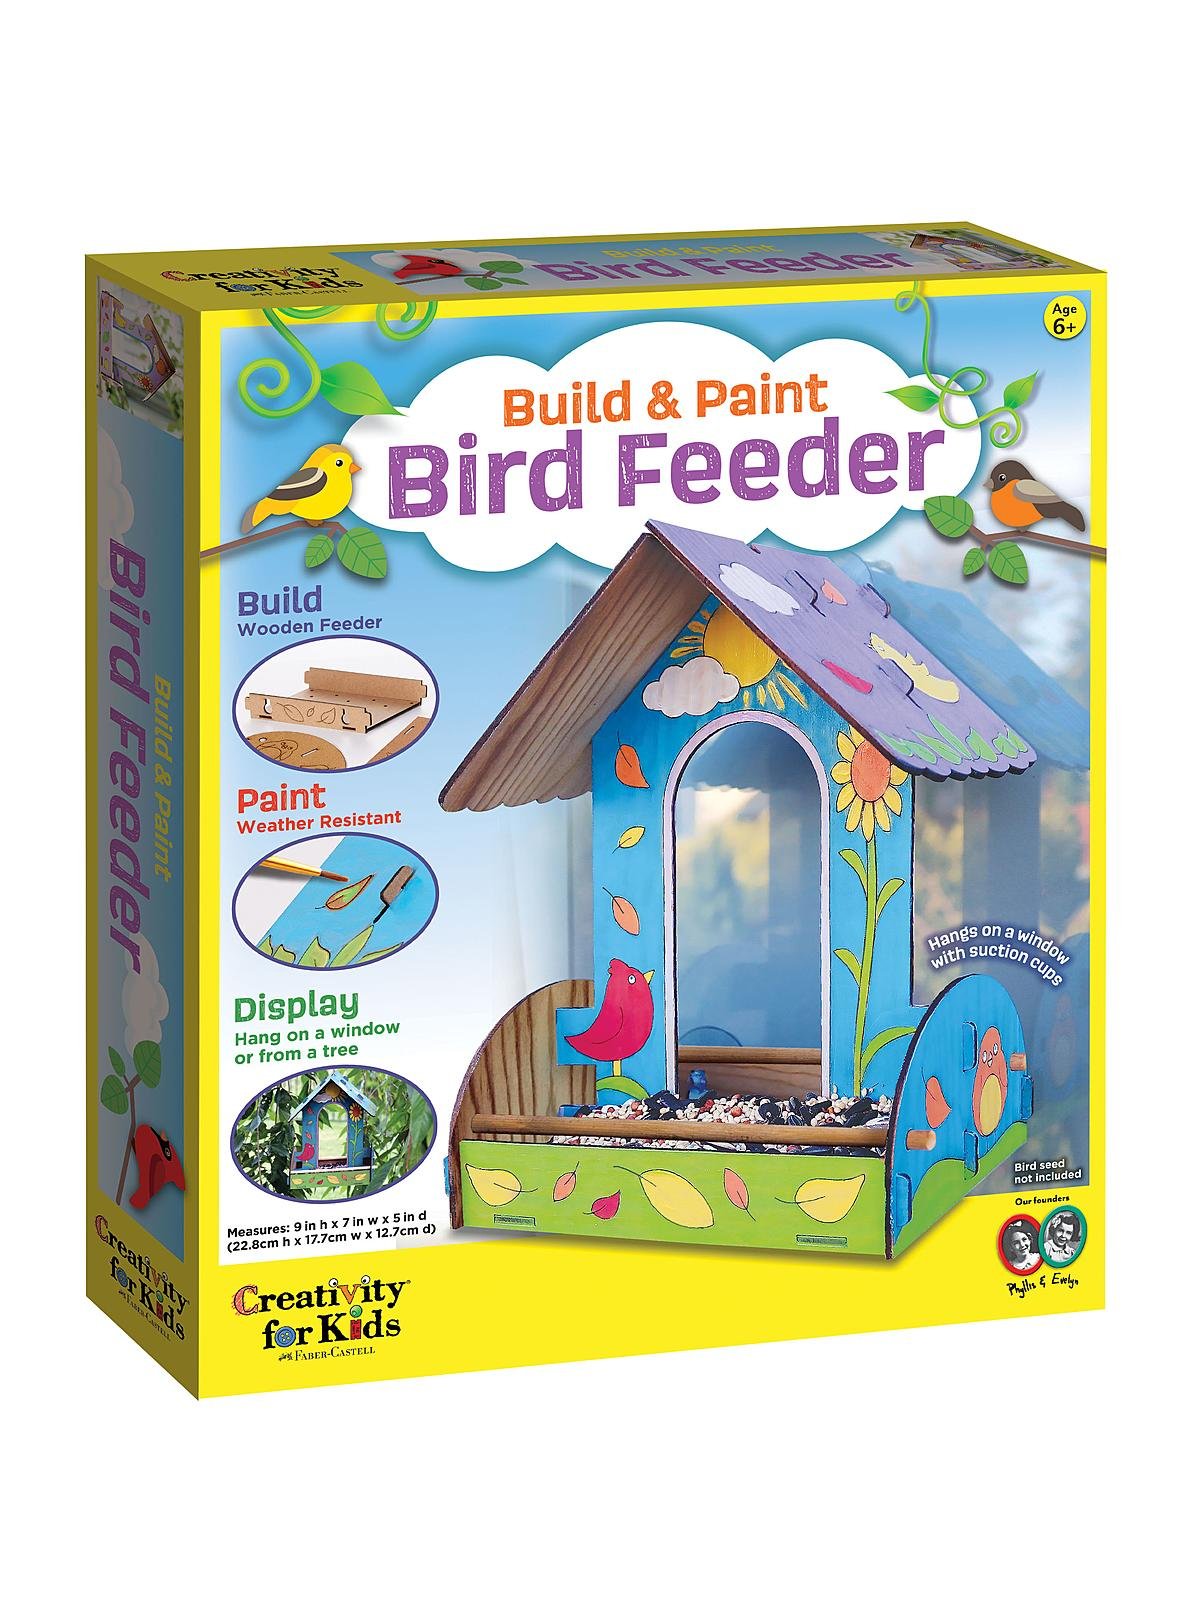 Creativity For Kids - Build & Paint Bird Feeder